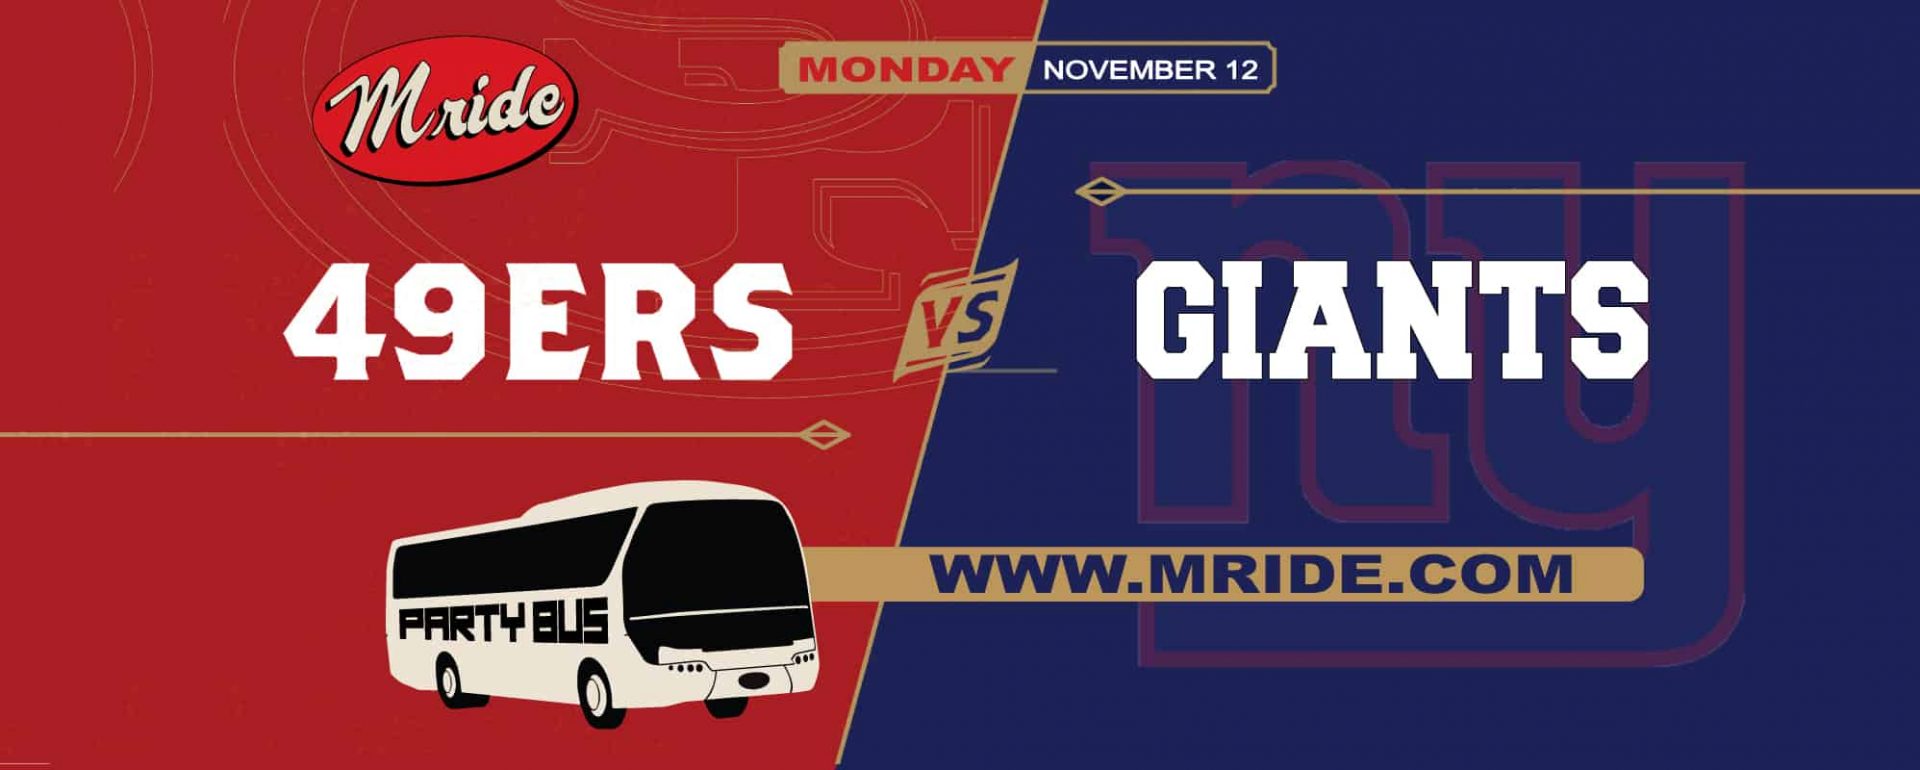 49ers vs. Giants Party Bus to Levi's Stadium